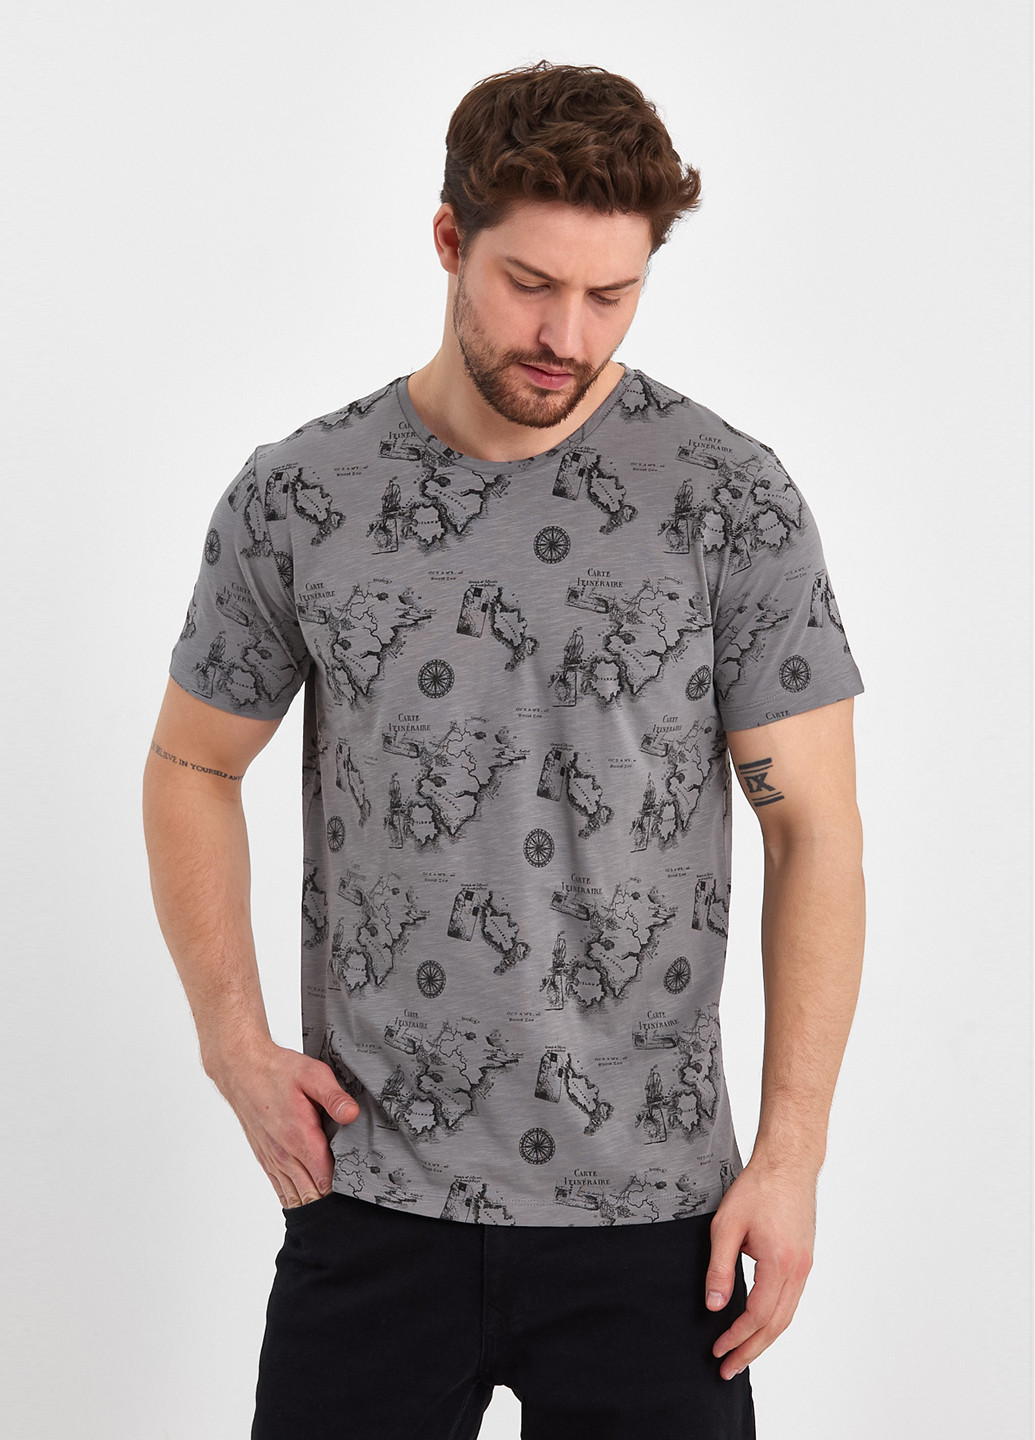 Серая футболка-футболка для мужчин Trend Collection с рисунком